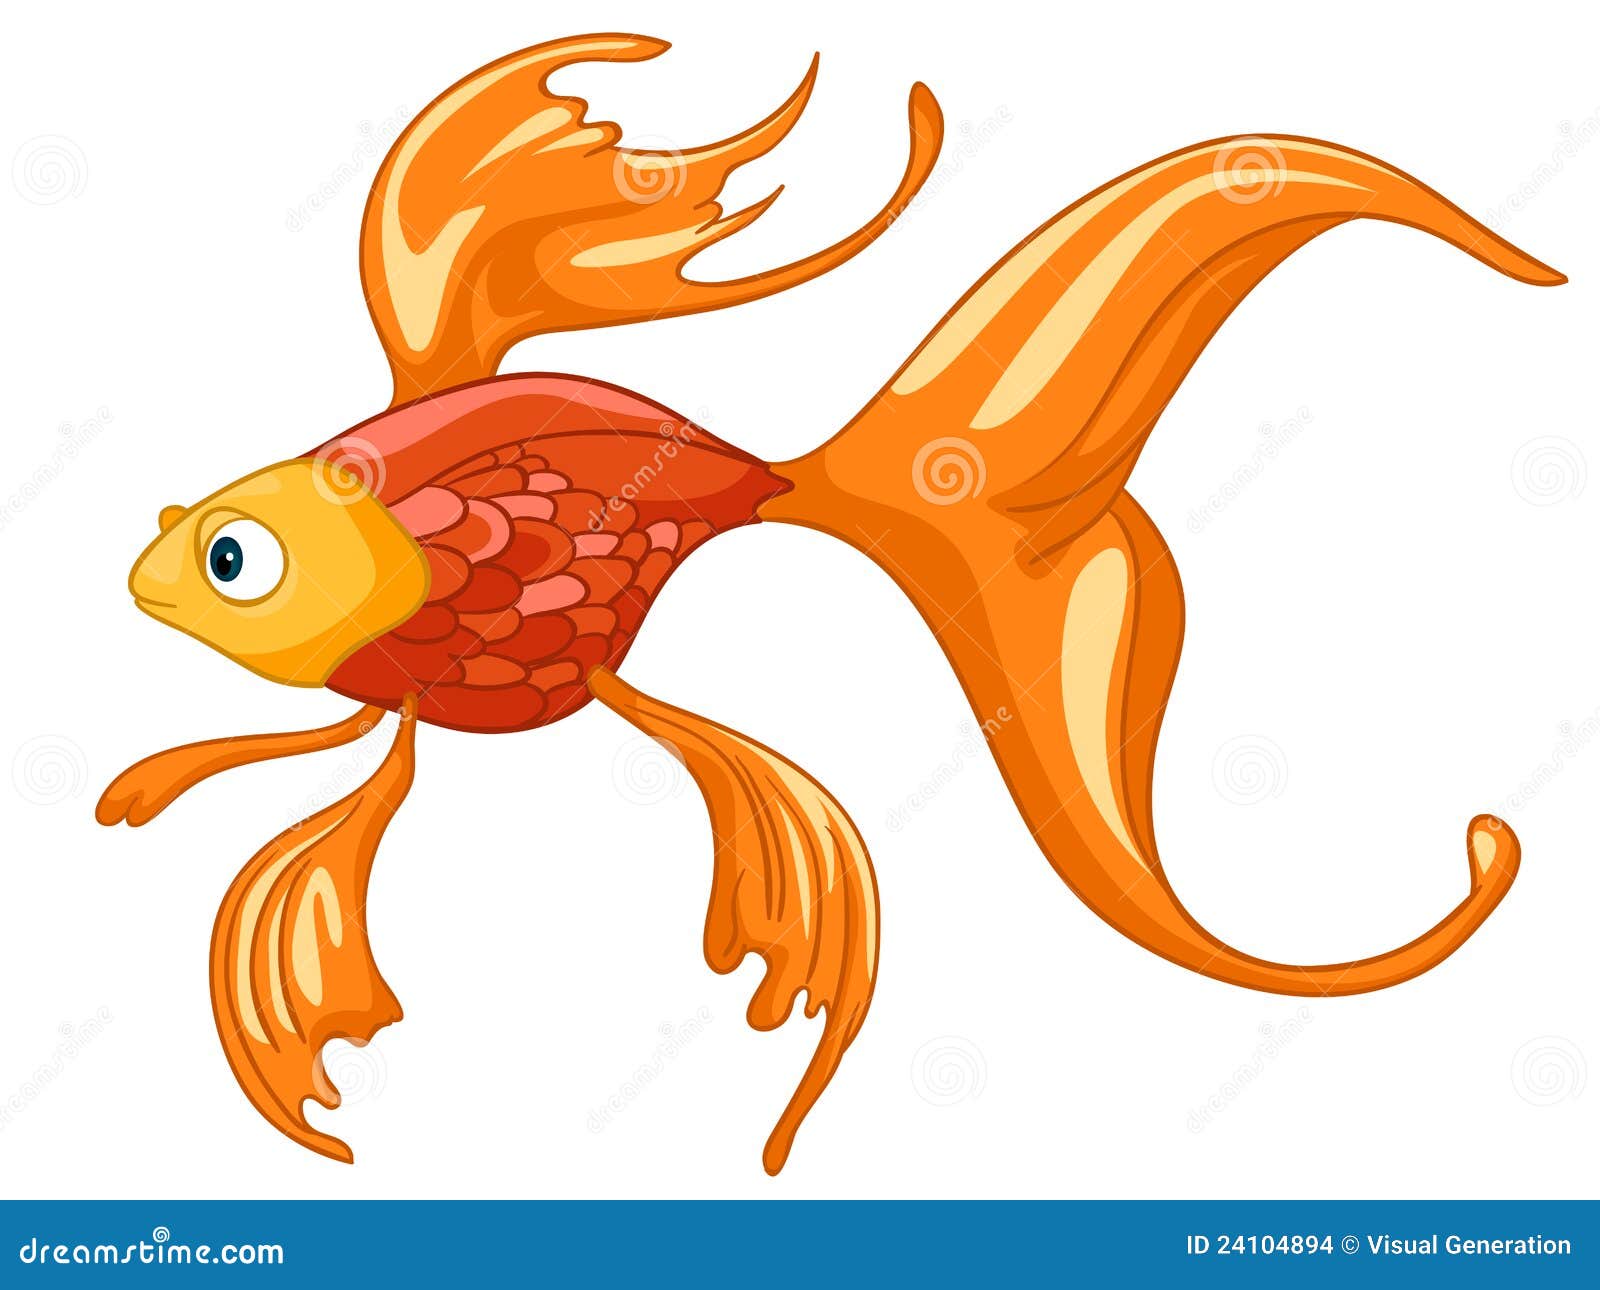 Cartoon Character Fish stock vector. Illustration of smiling - 24104894